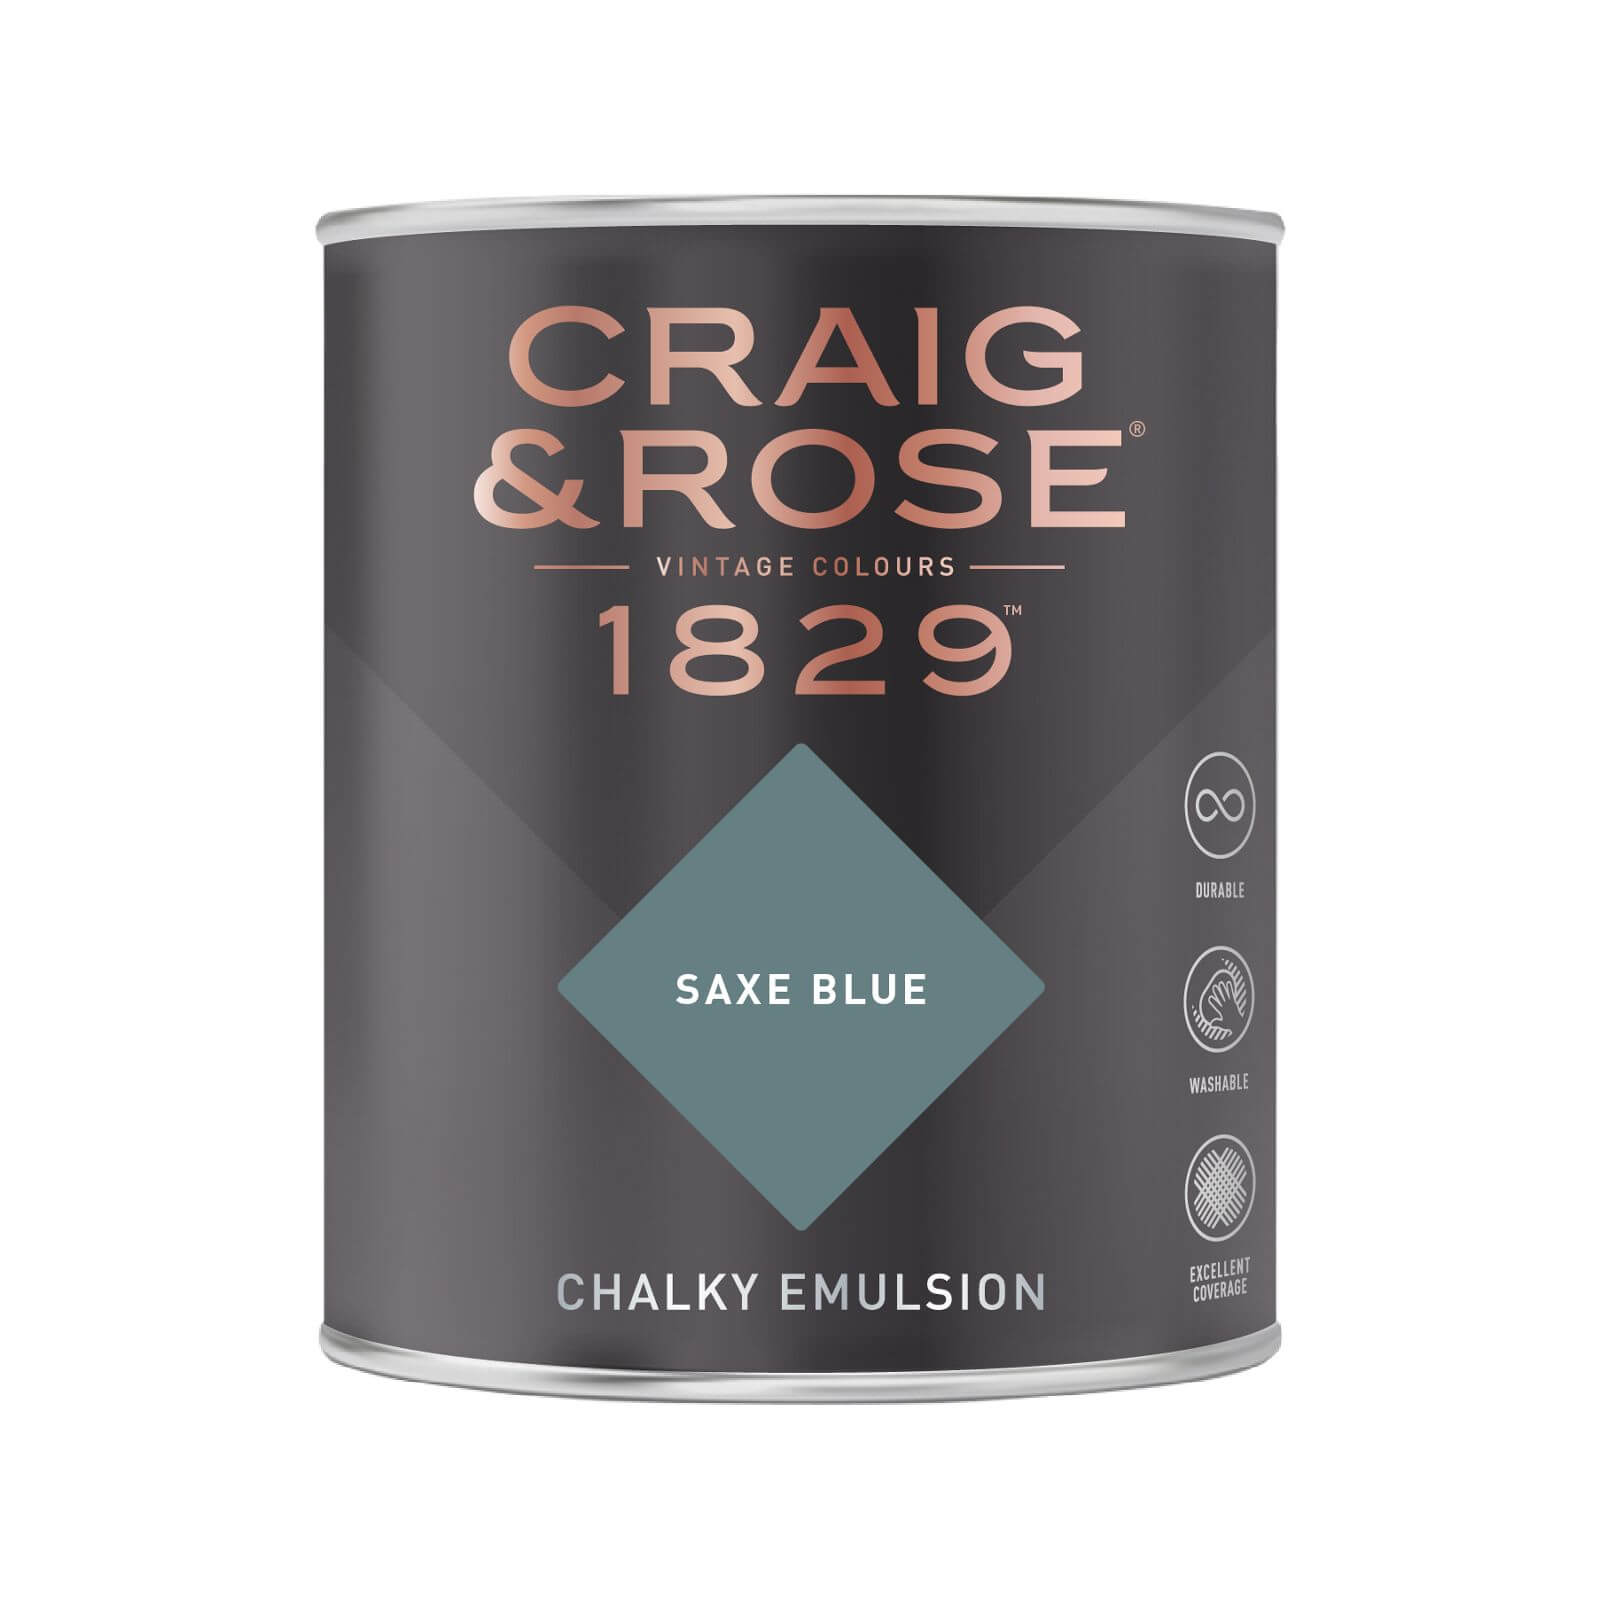 Craig & Rose 1829 Chalky Emulsion Paint Saxe Blue - 750ml